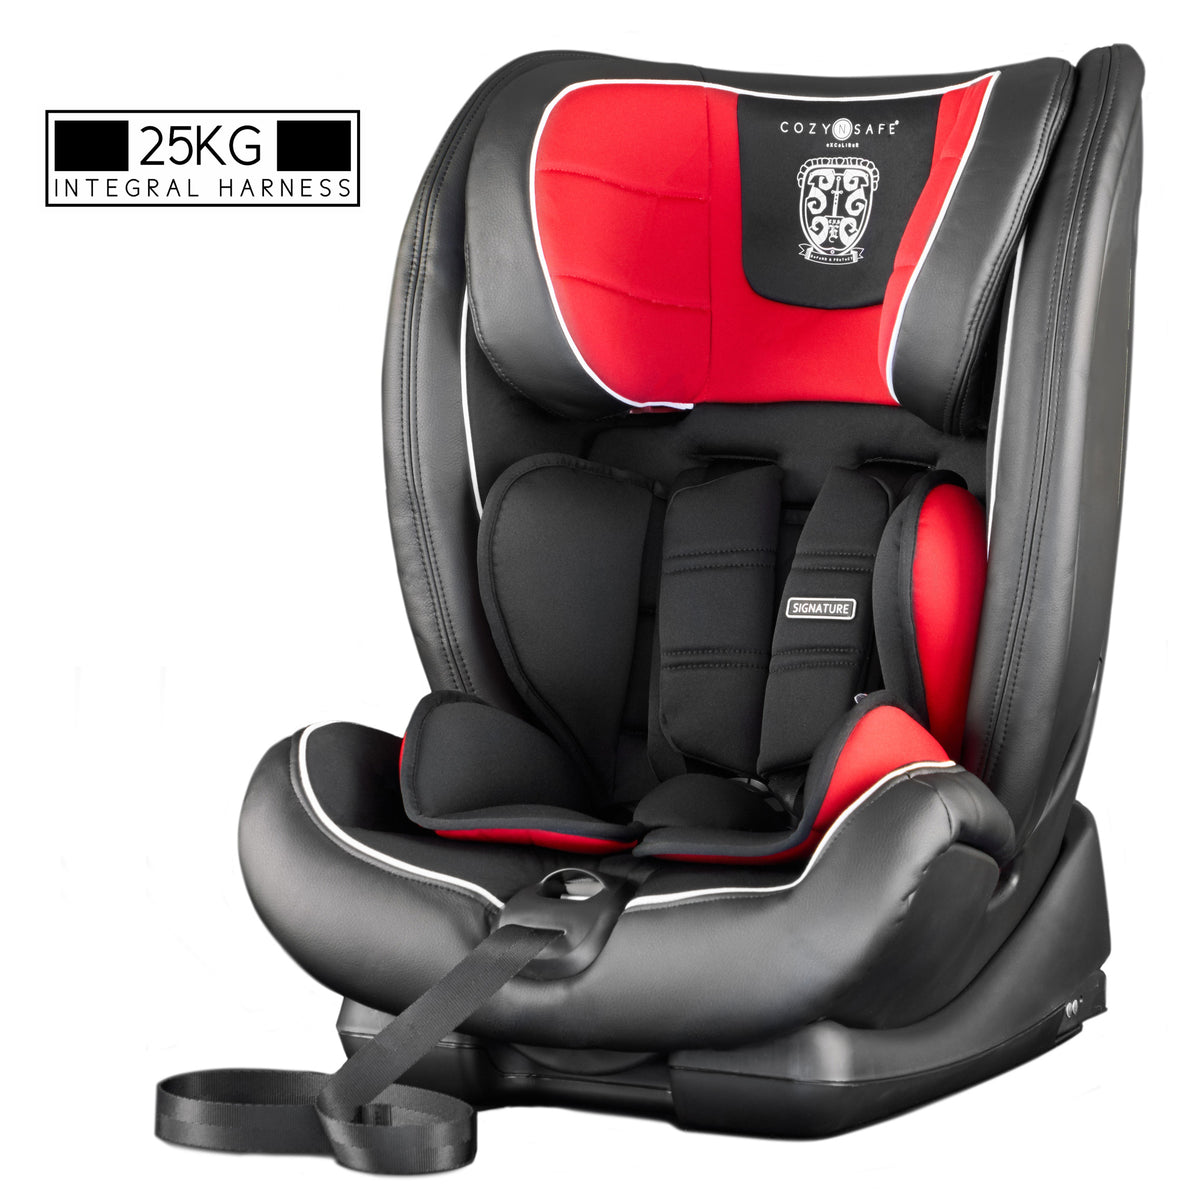 Excalibur Group 1/2/3 Child Car Seat - (25KG Harness) Black/Red